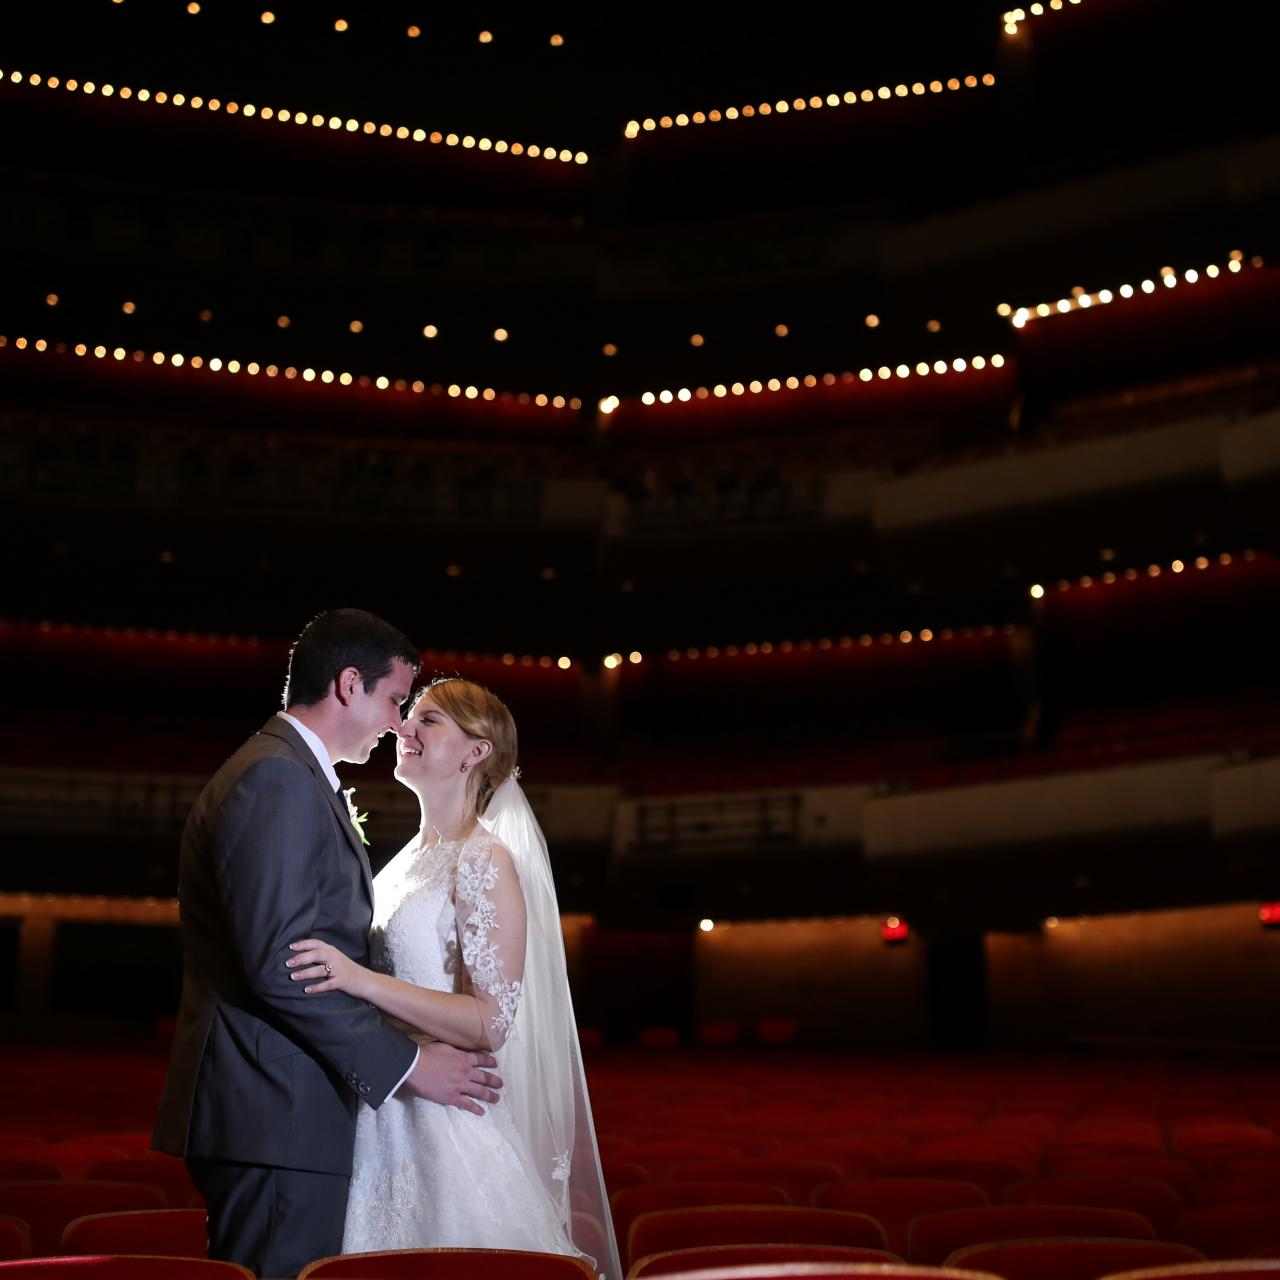 Unusual Las Vegas weddings: Get married by plane, ship or coaster - Las  Vegas Sun News